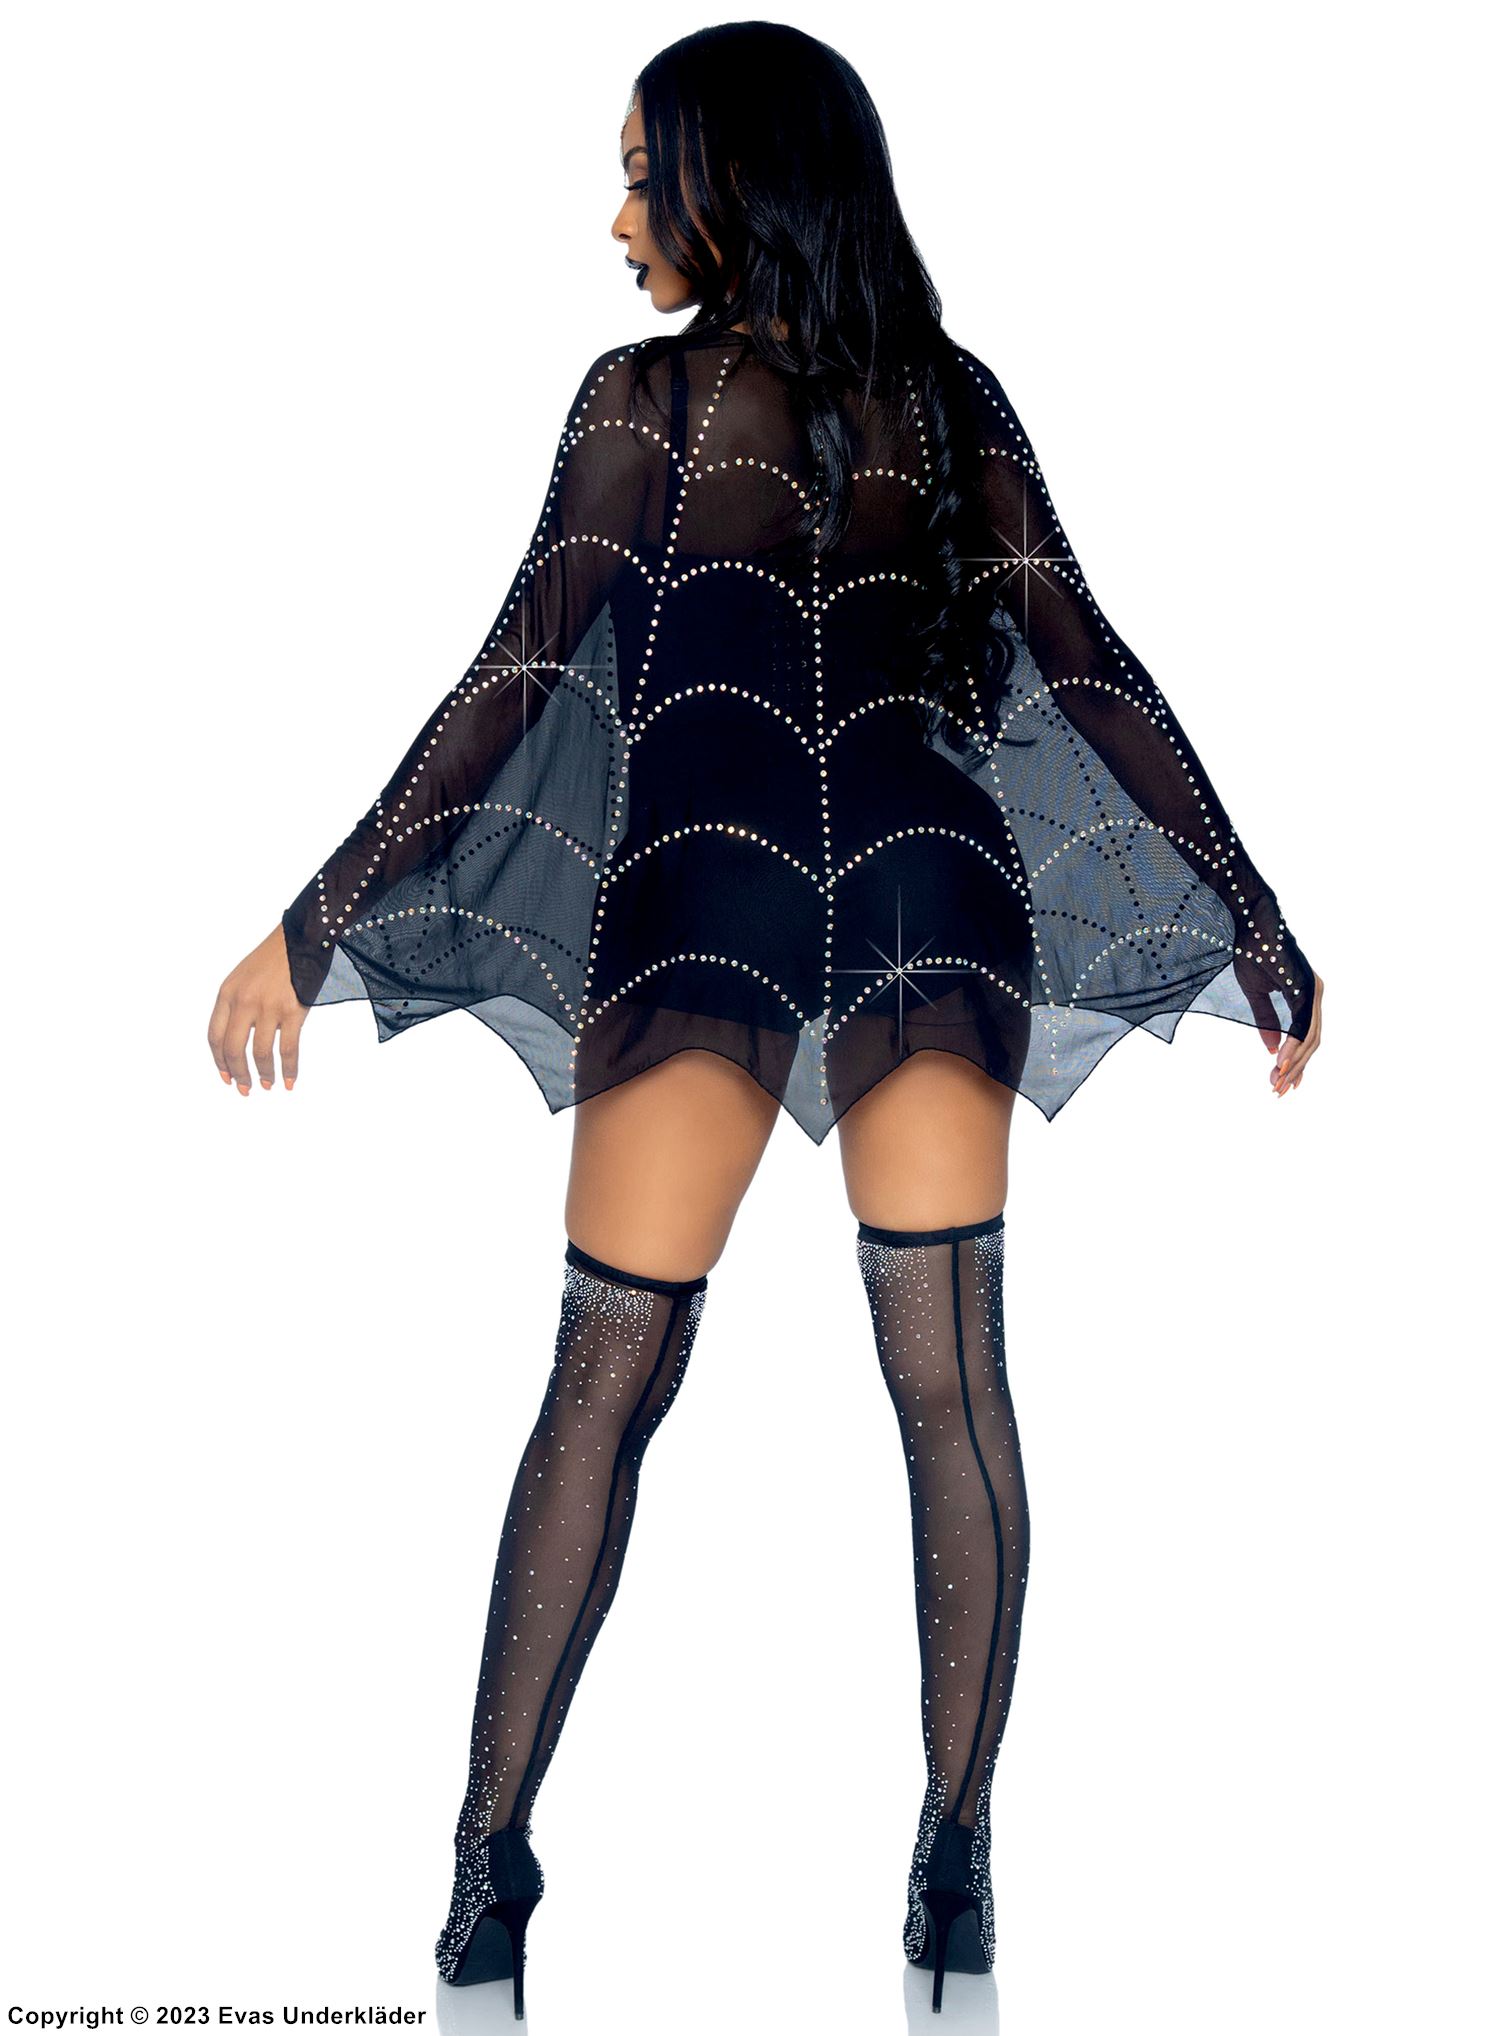 Costume poncho, rhinestones, spider web